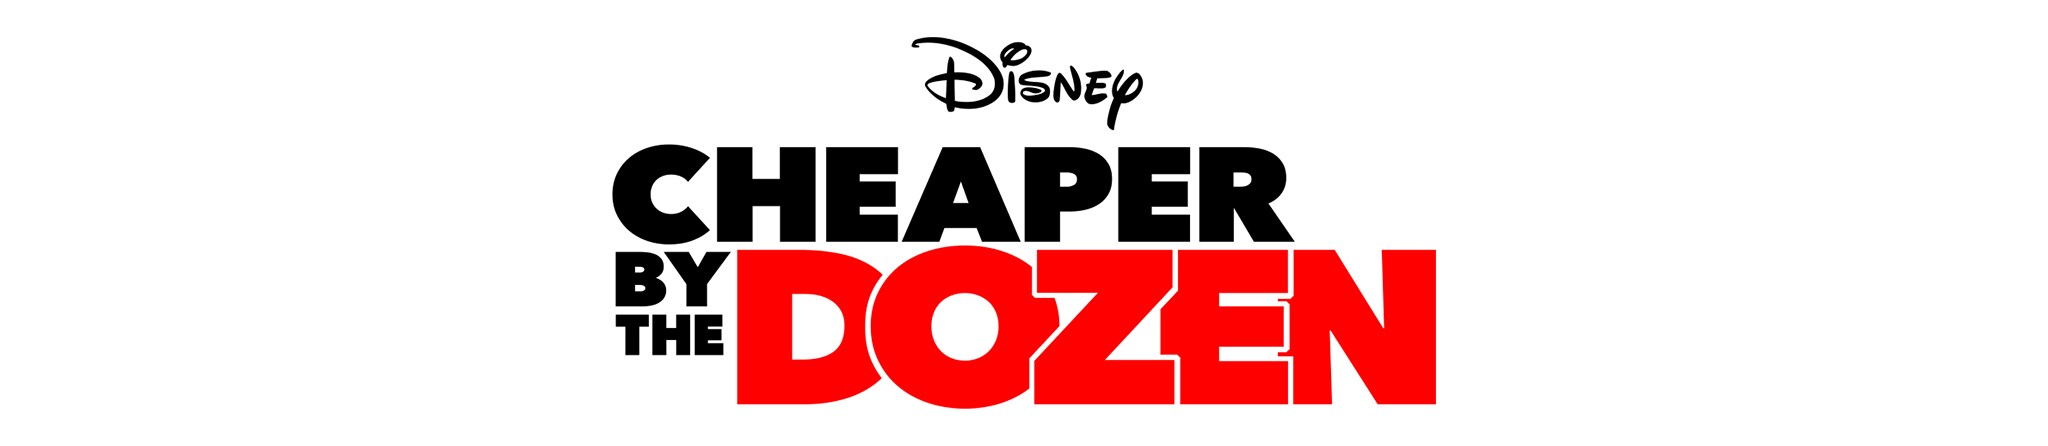 Disney | Cheaper by the Dozen